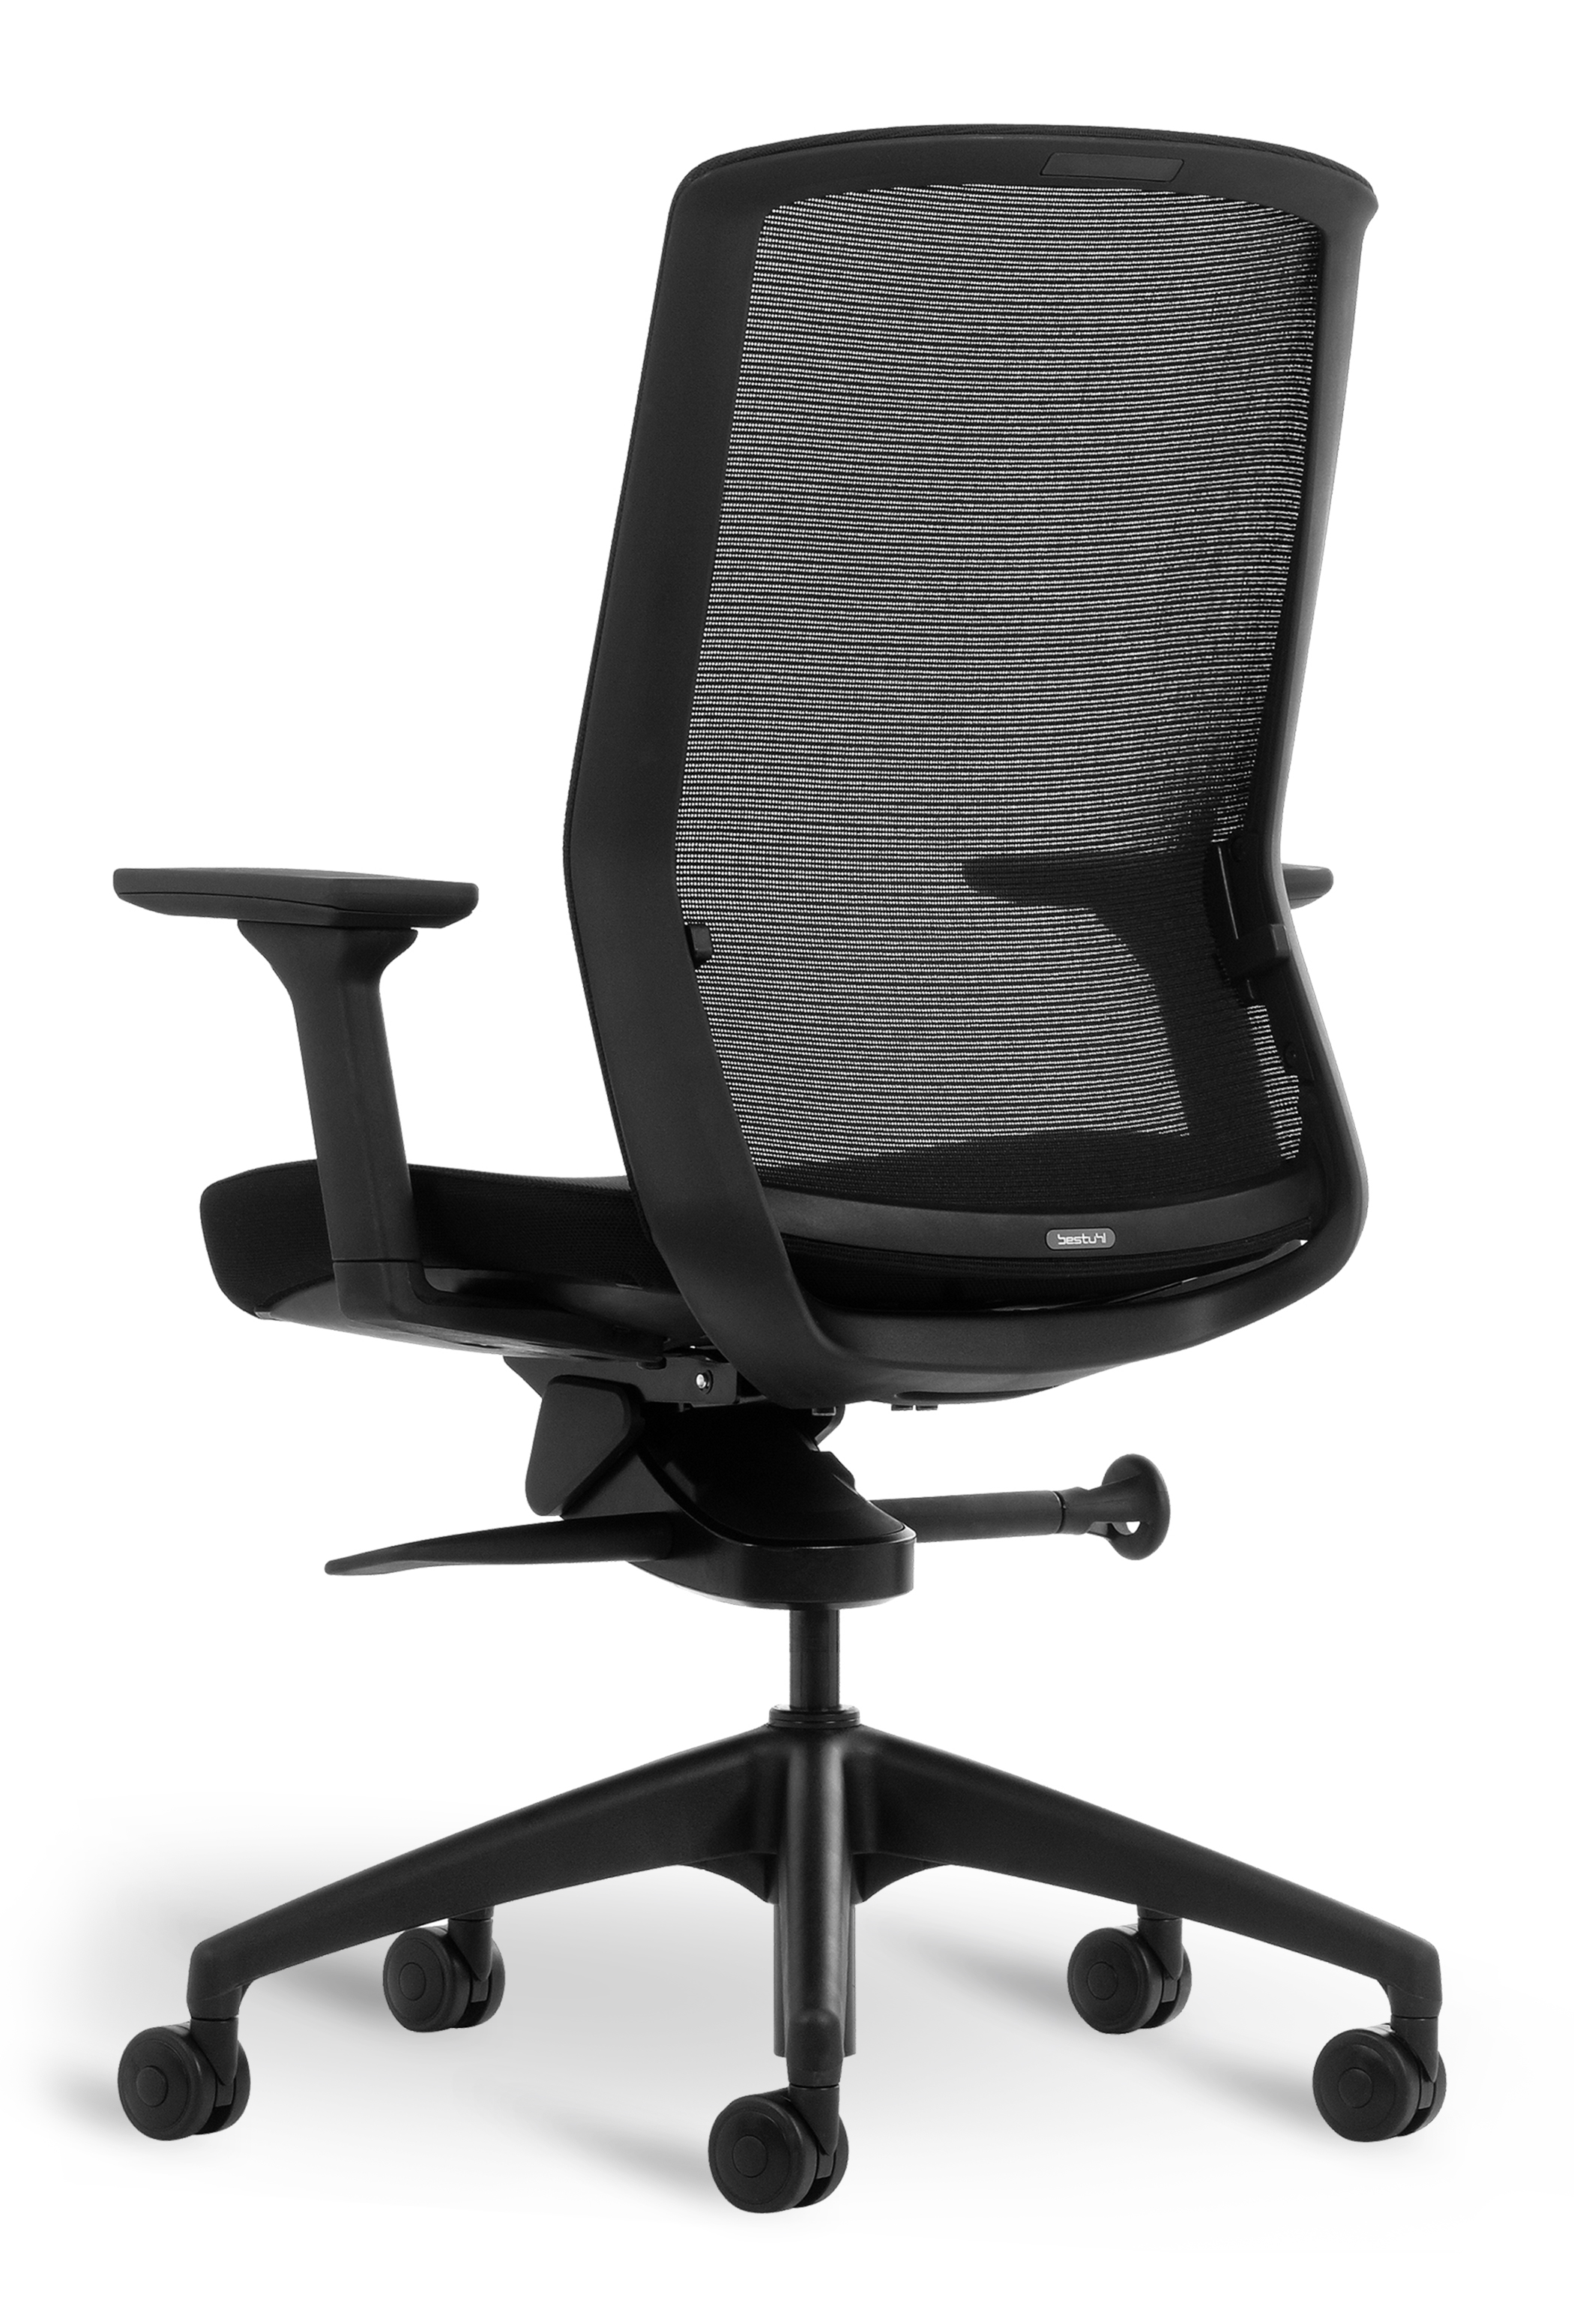 WS - J1 task chair - Black, black base (Back angle)